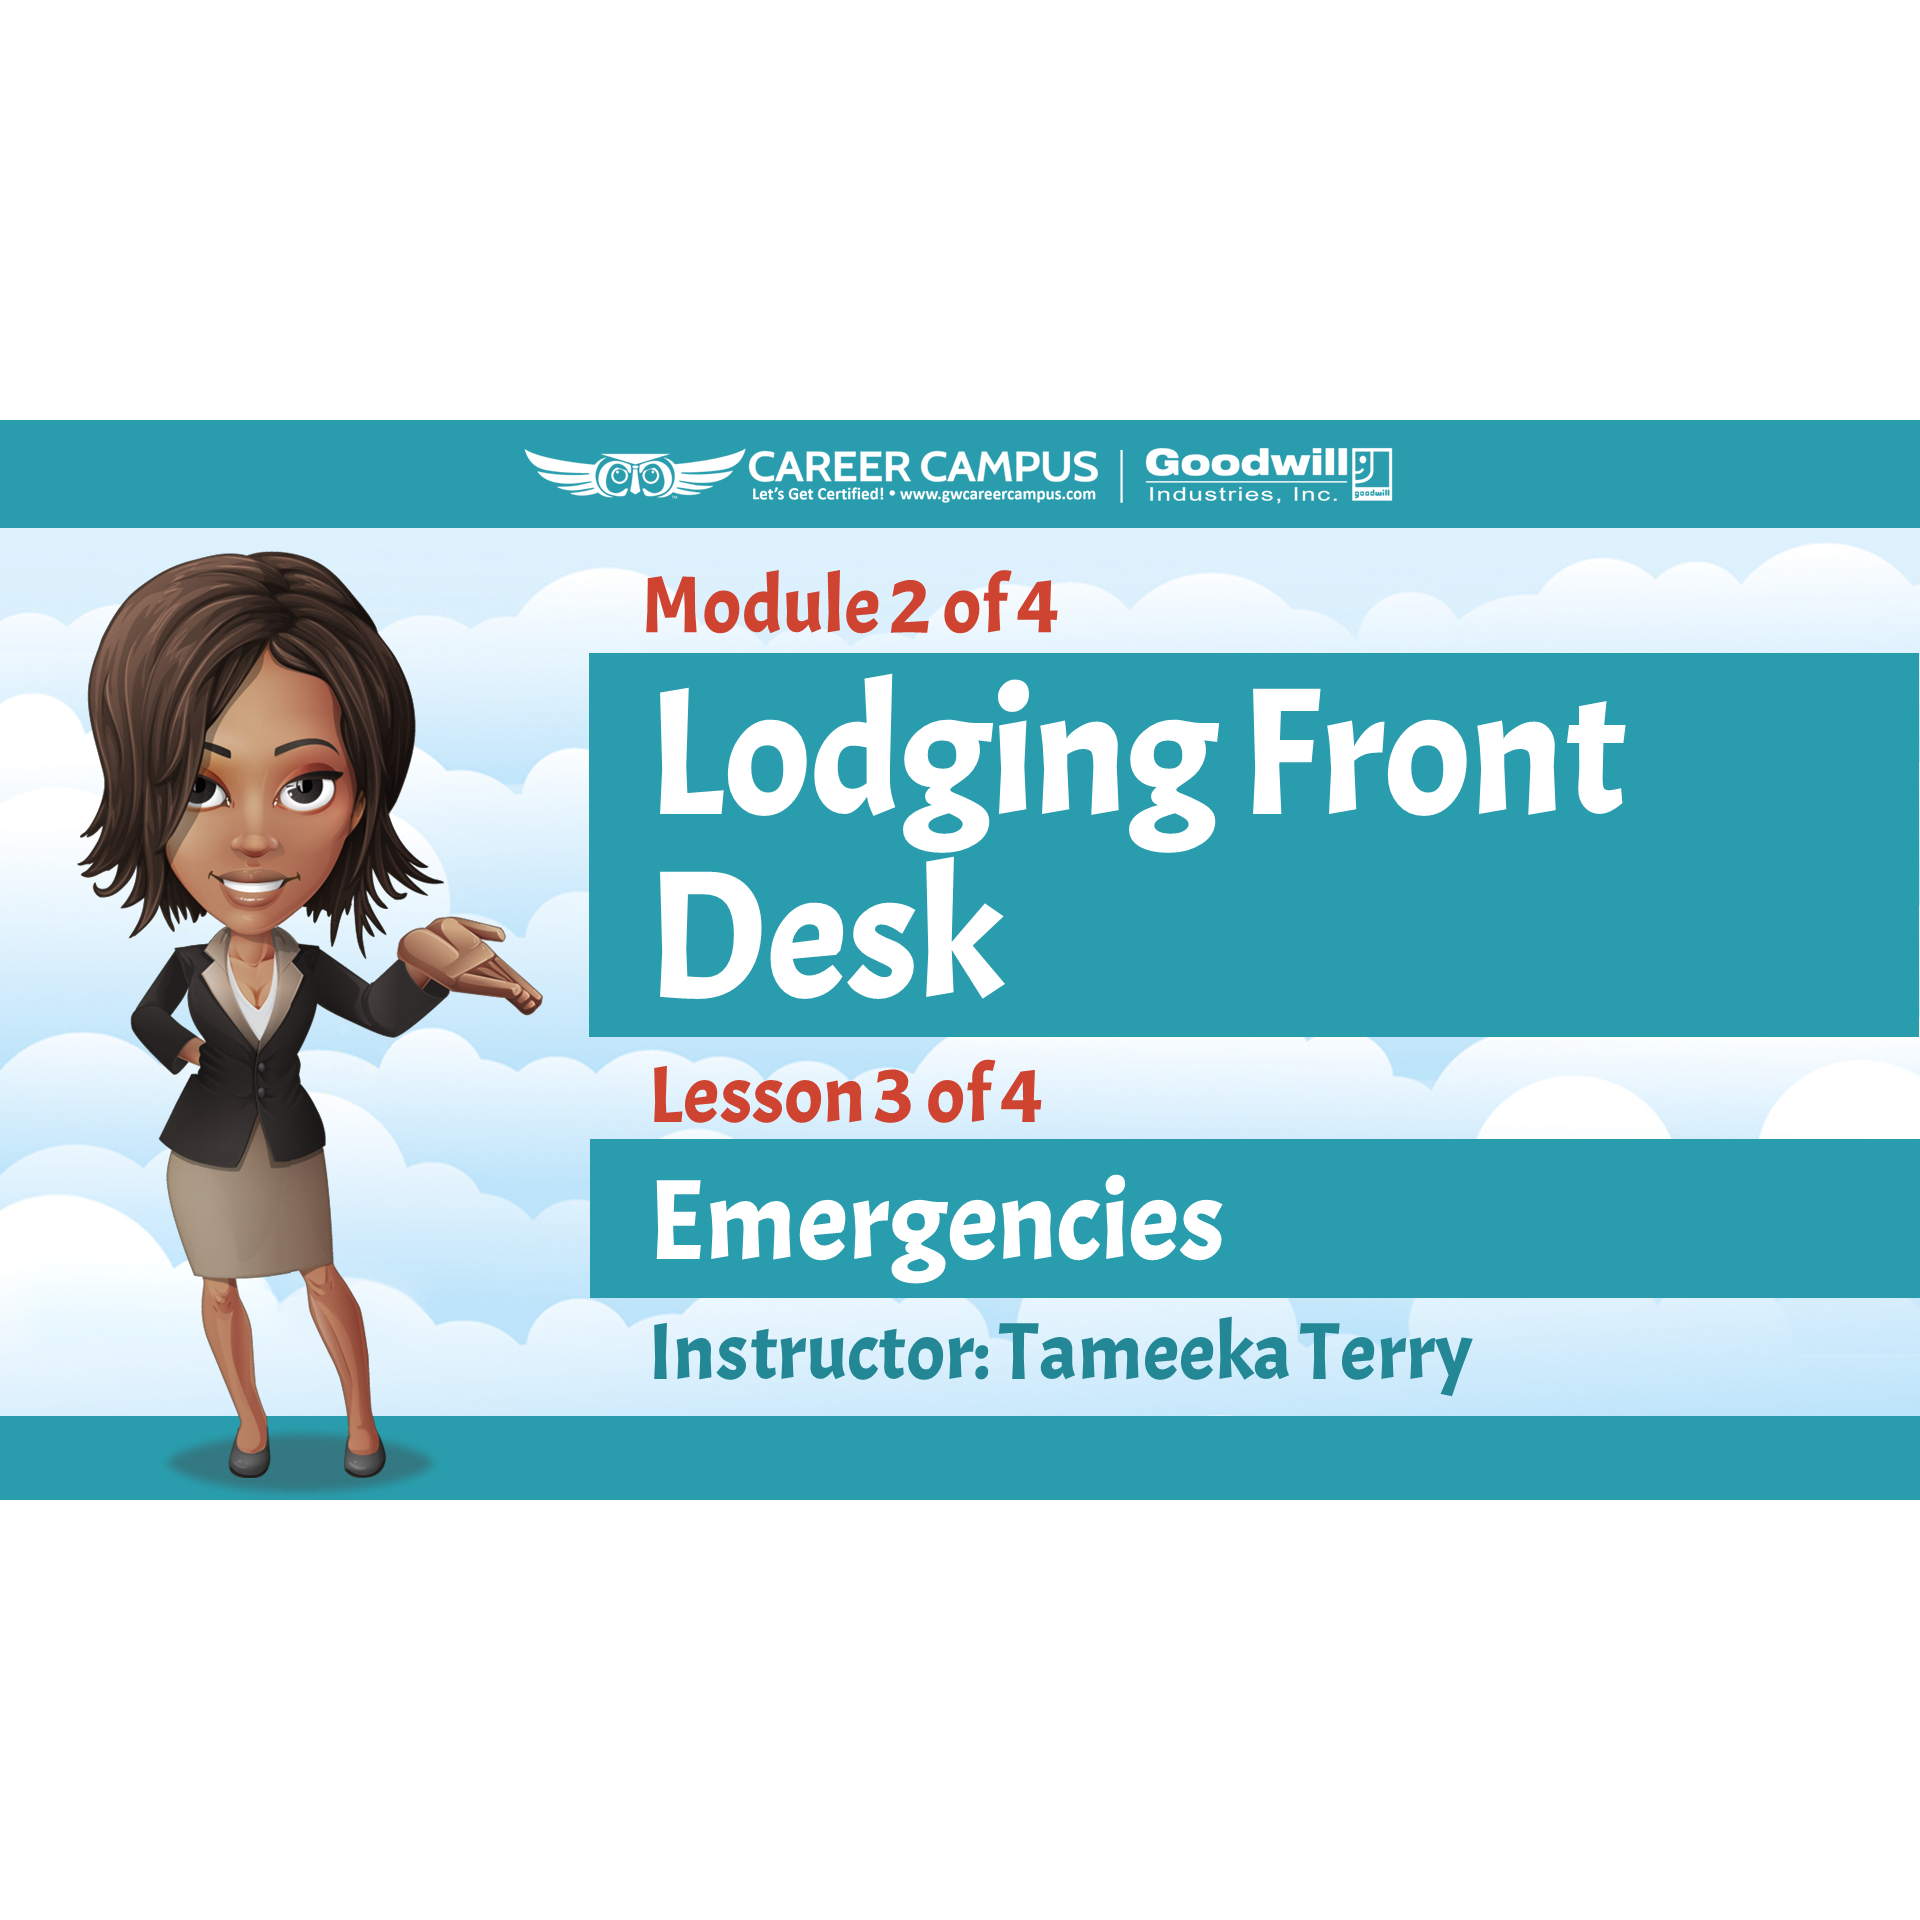 lodging front desk module 2 image